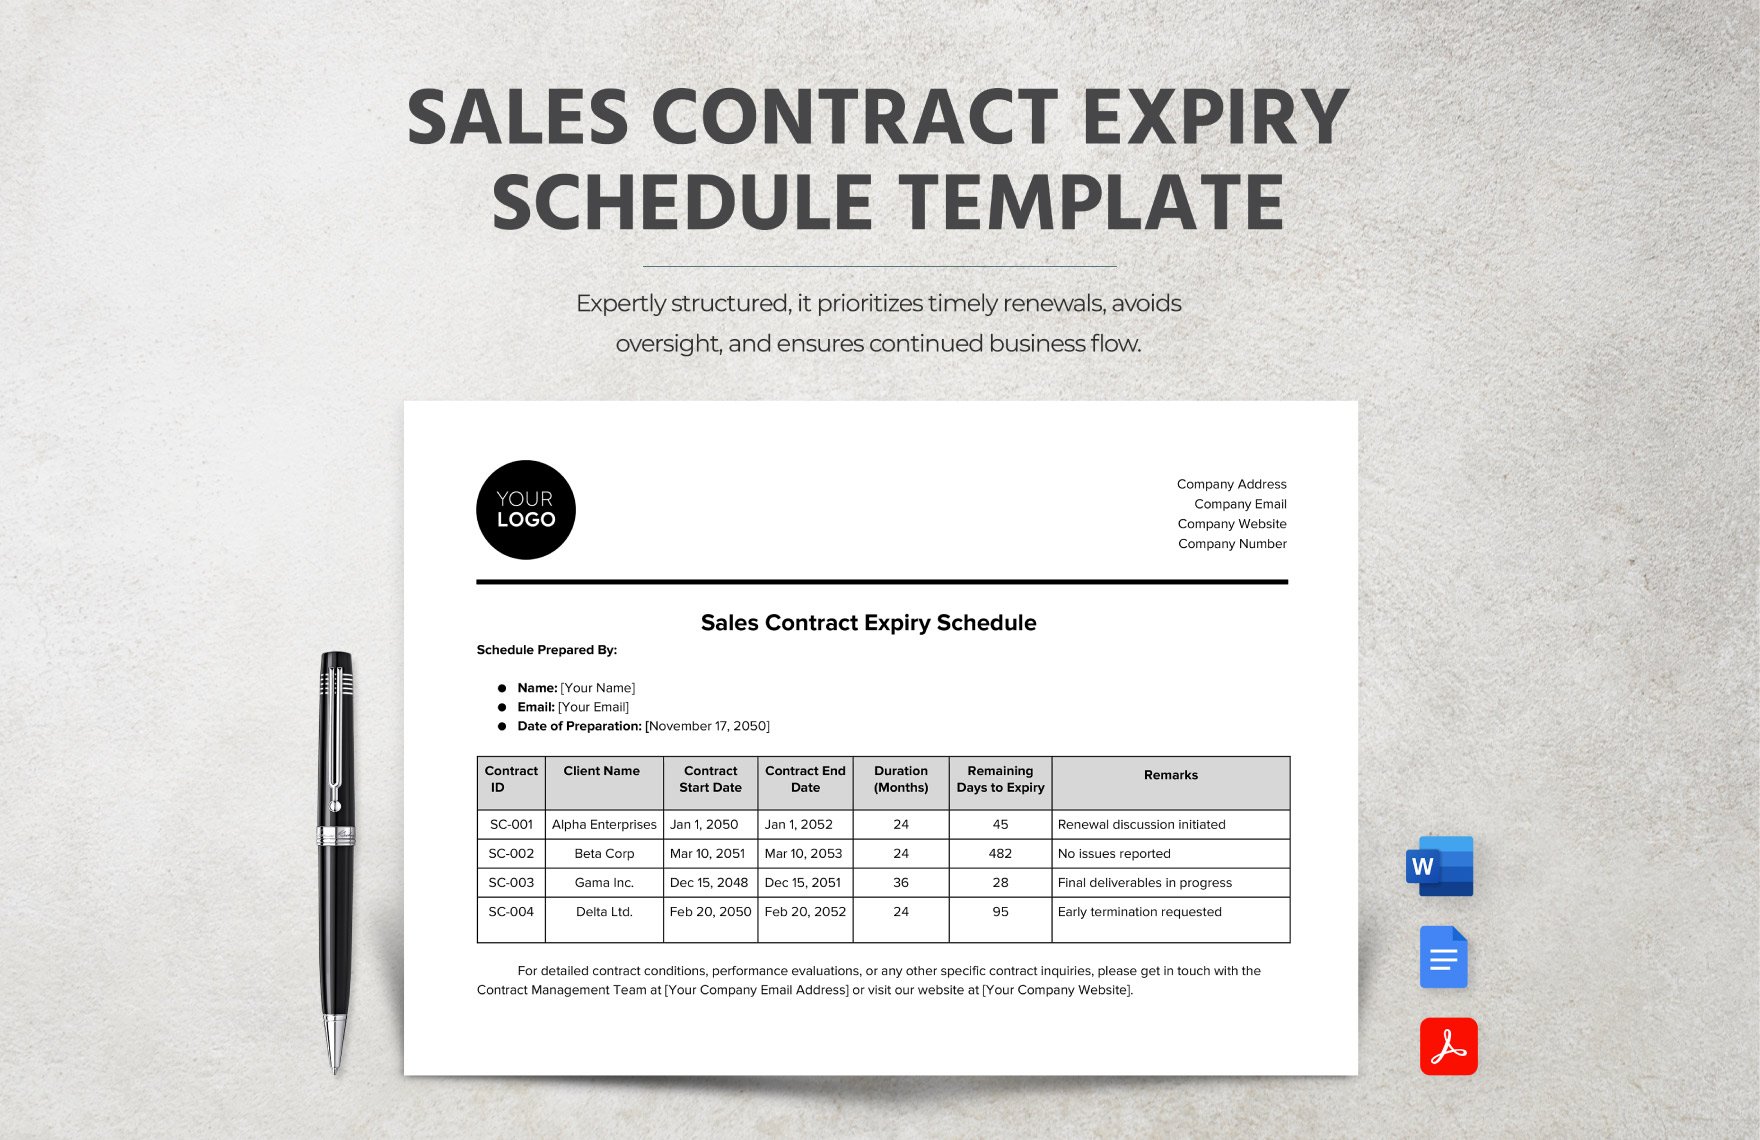 Sales Contract Expiry Schedule Template in Word, Google Docs, PDF